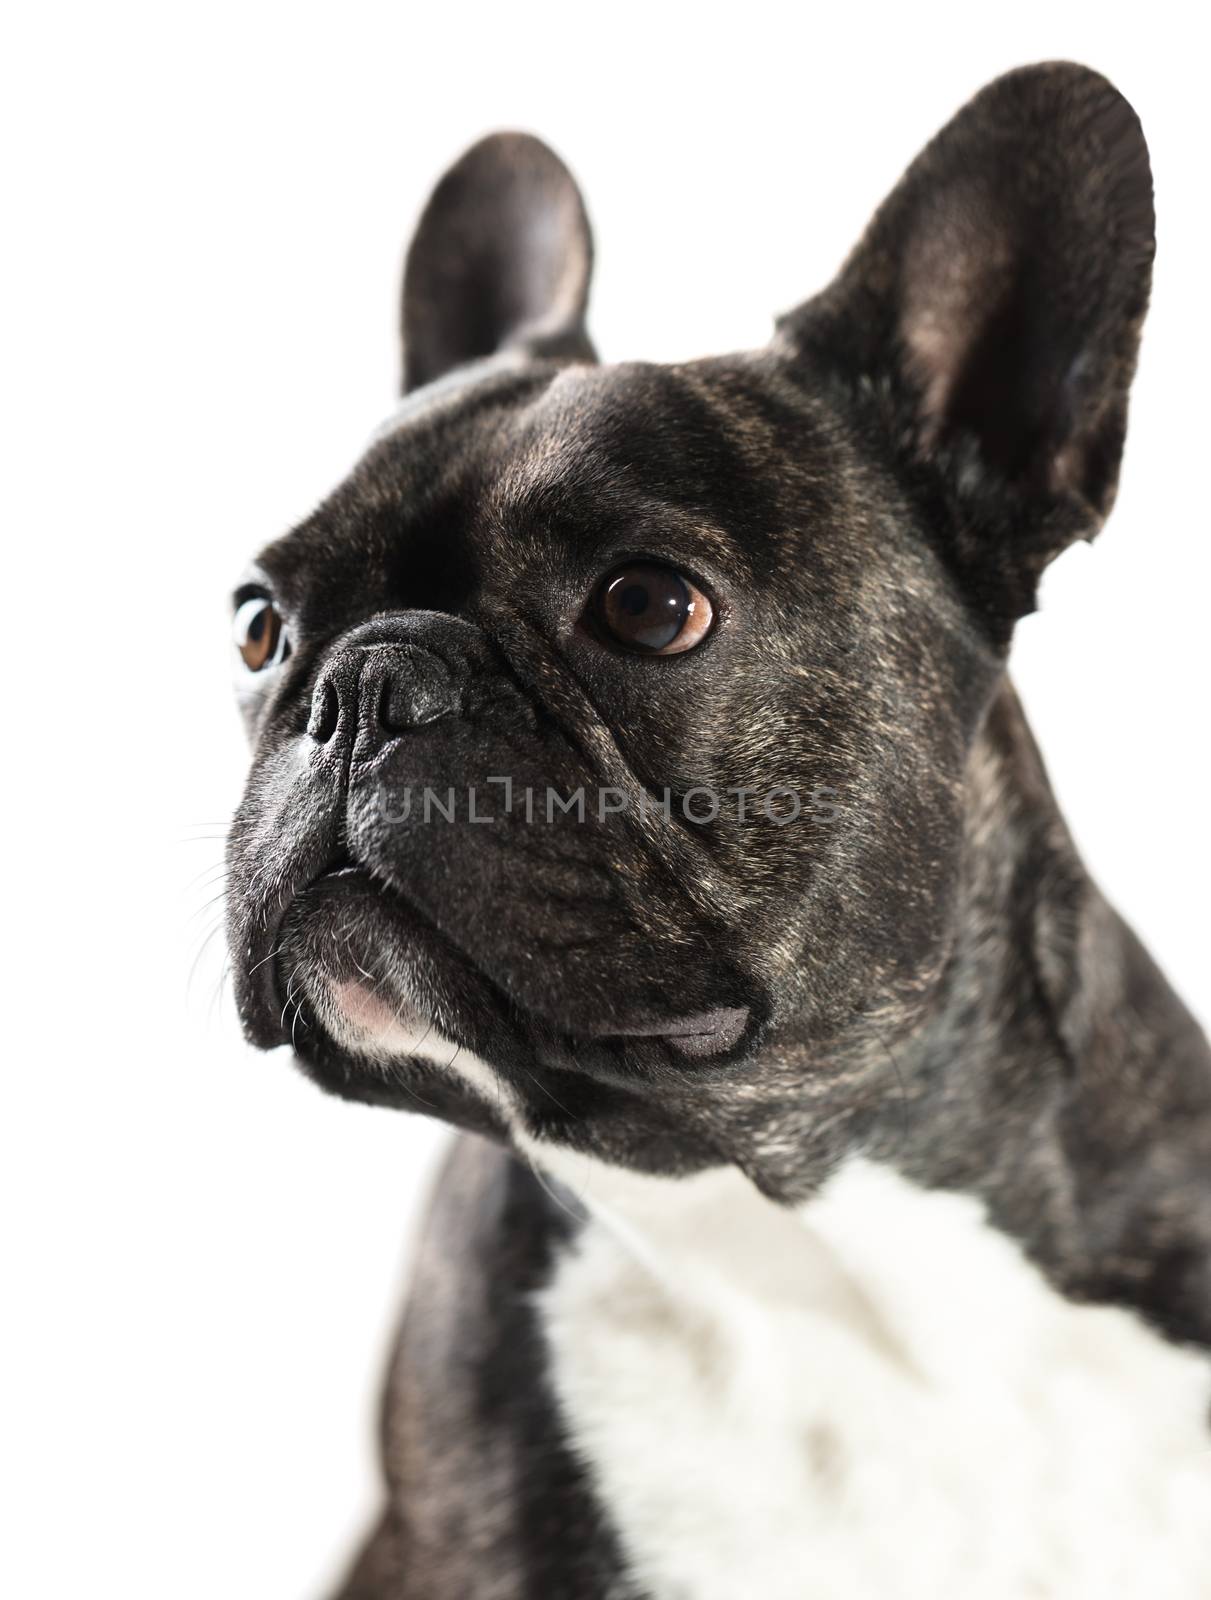 French Bulldog dog close-up on a white background